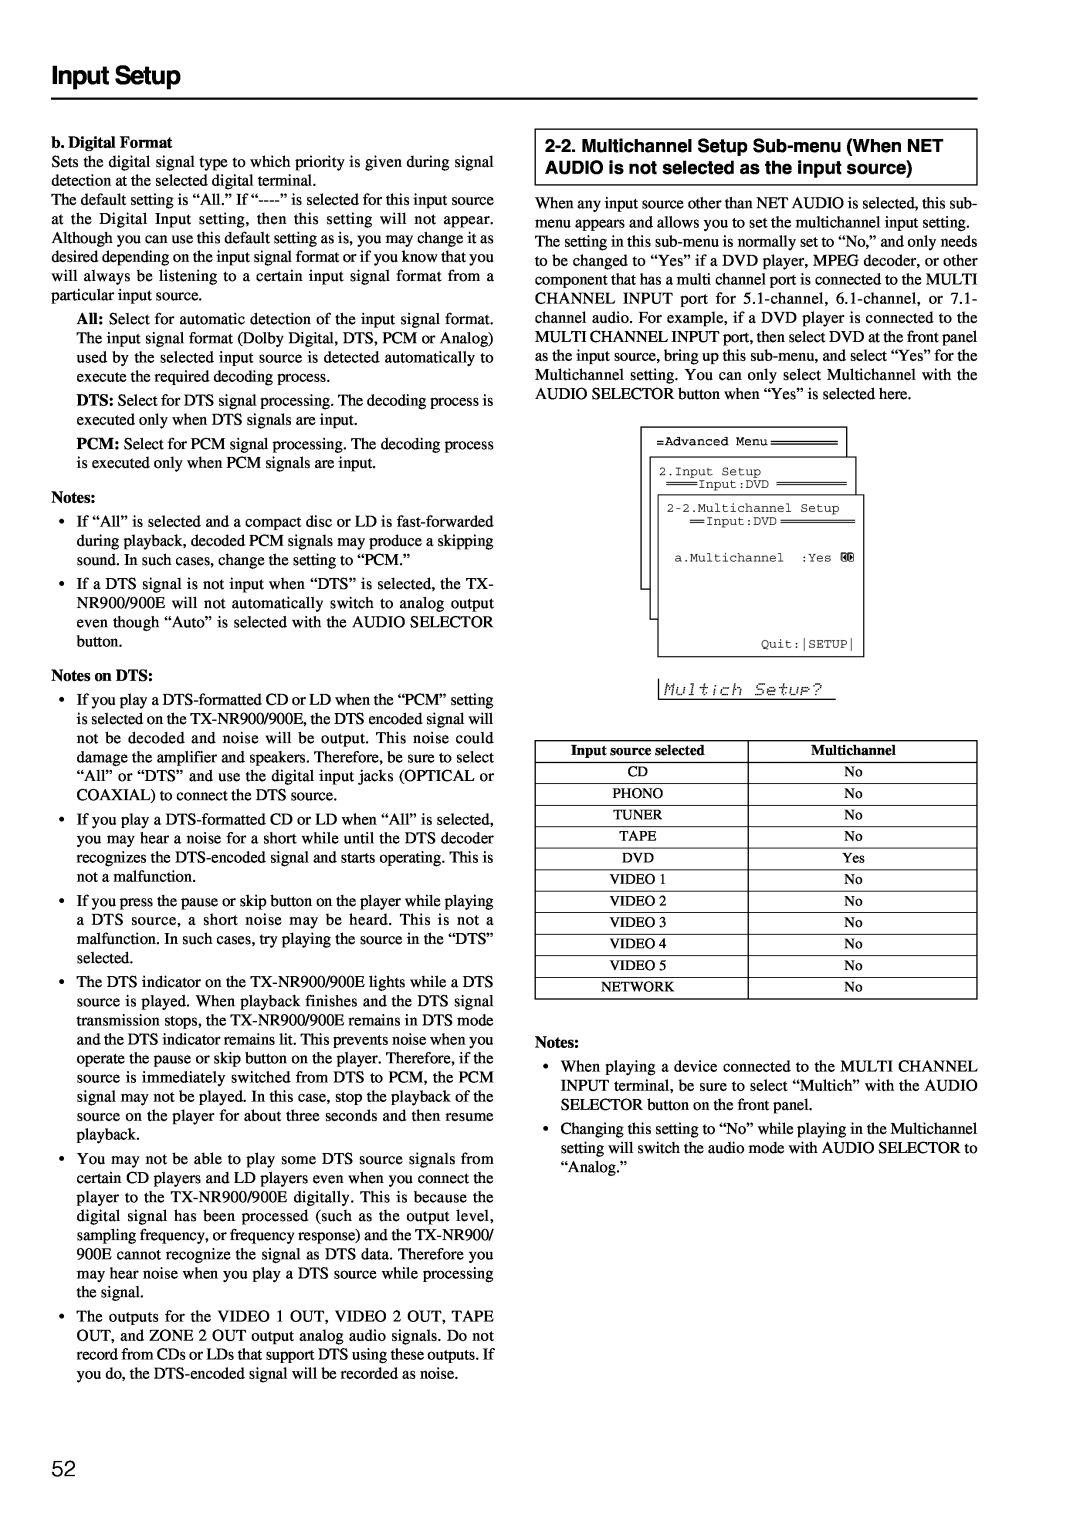 Onkyo TX-NR900E instruction manual Input Setup, b. Digital Format, Notes on DTS 